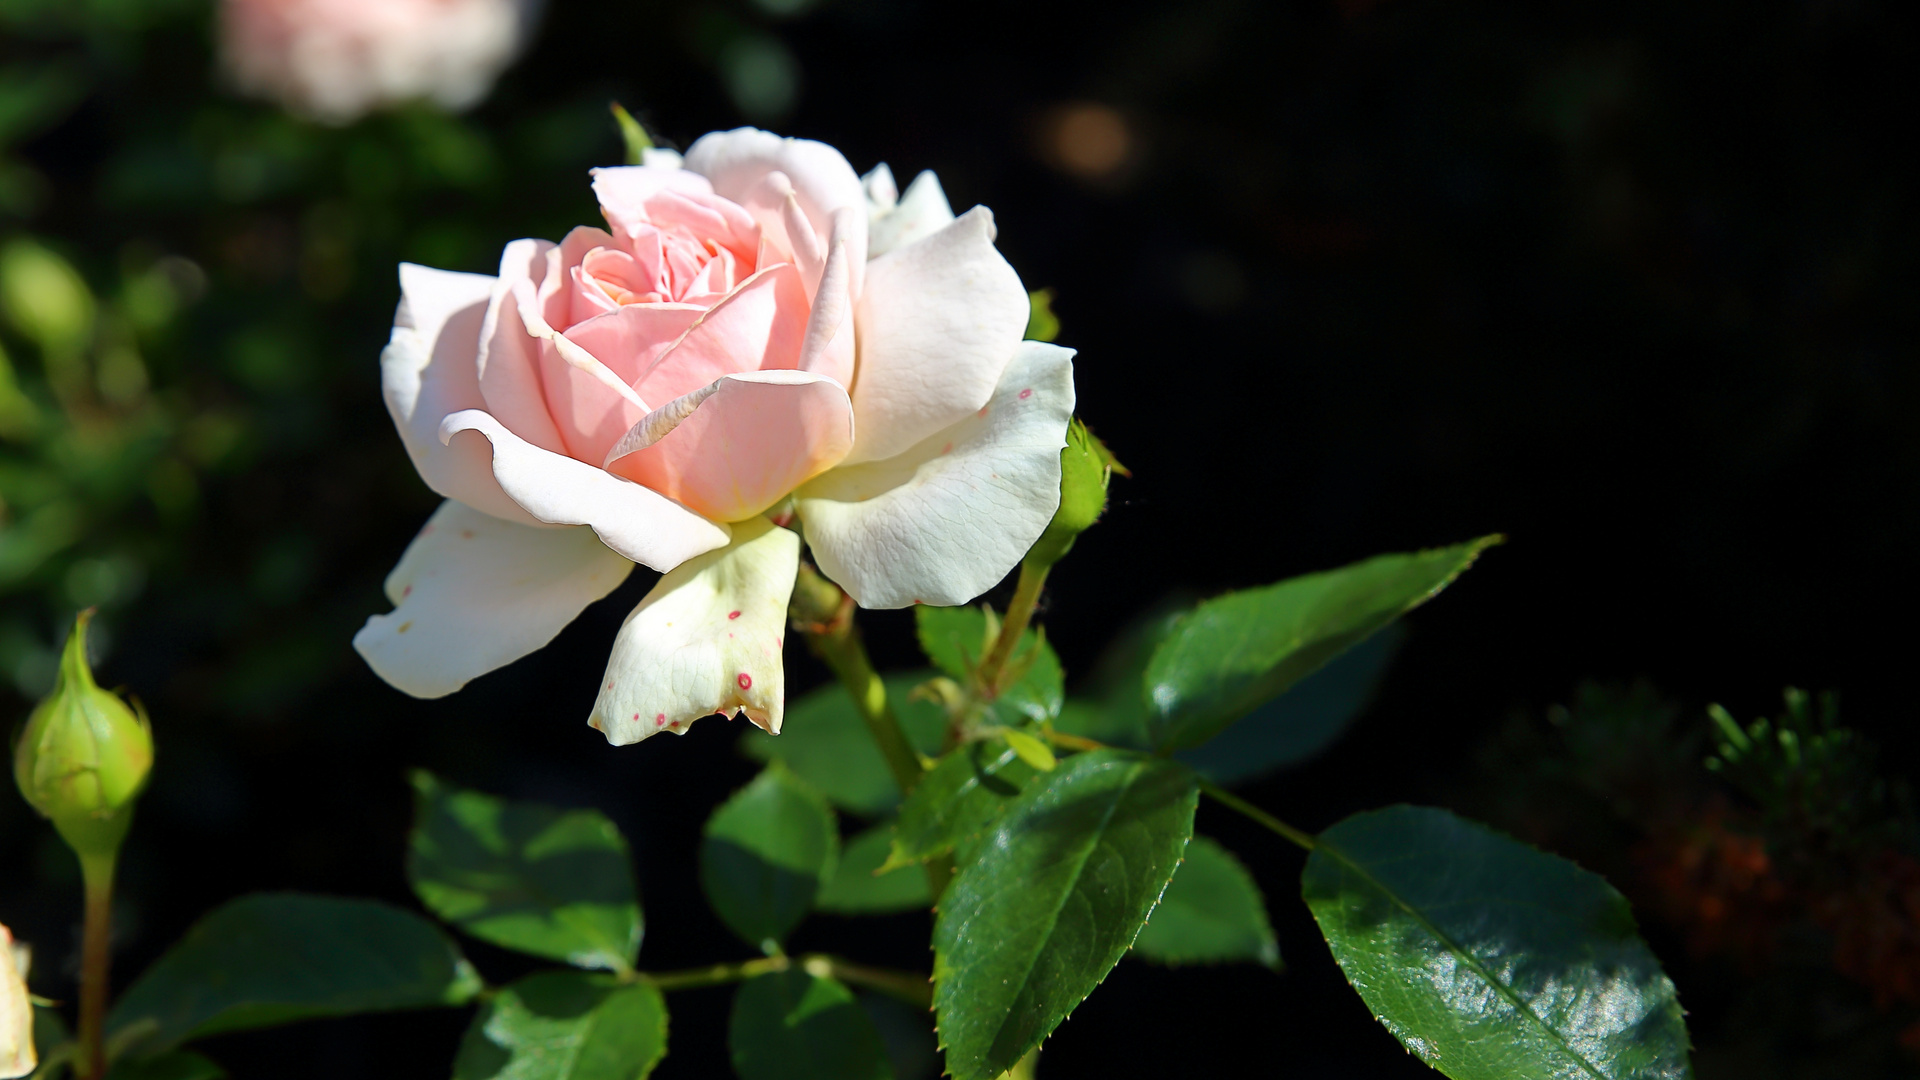 Rose zartrosa